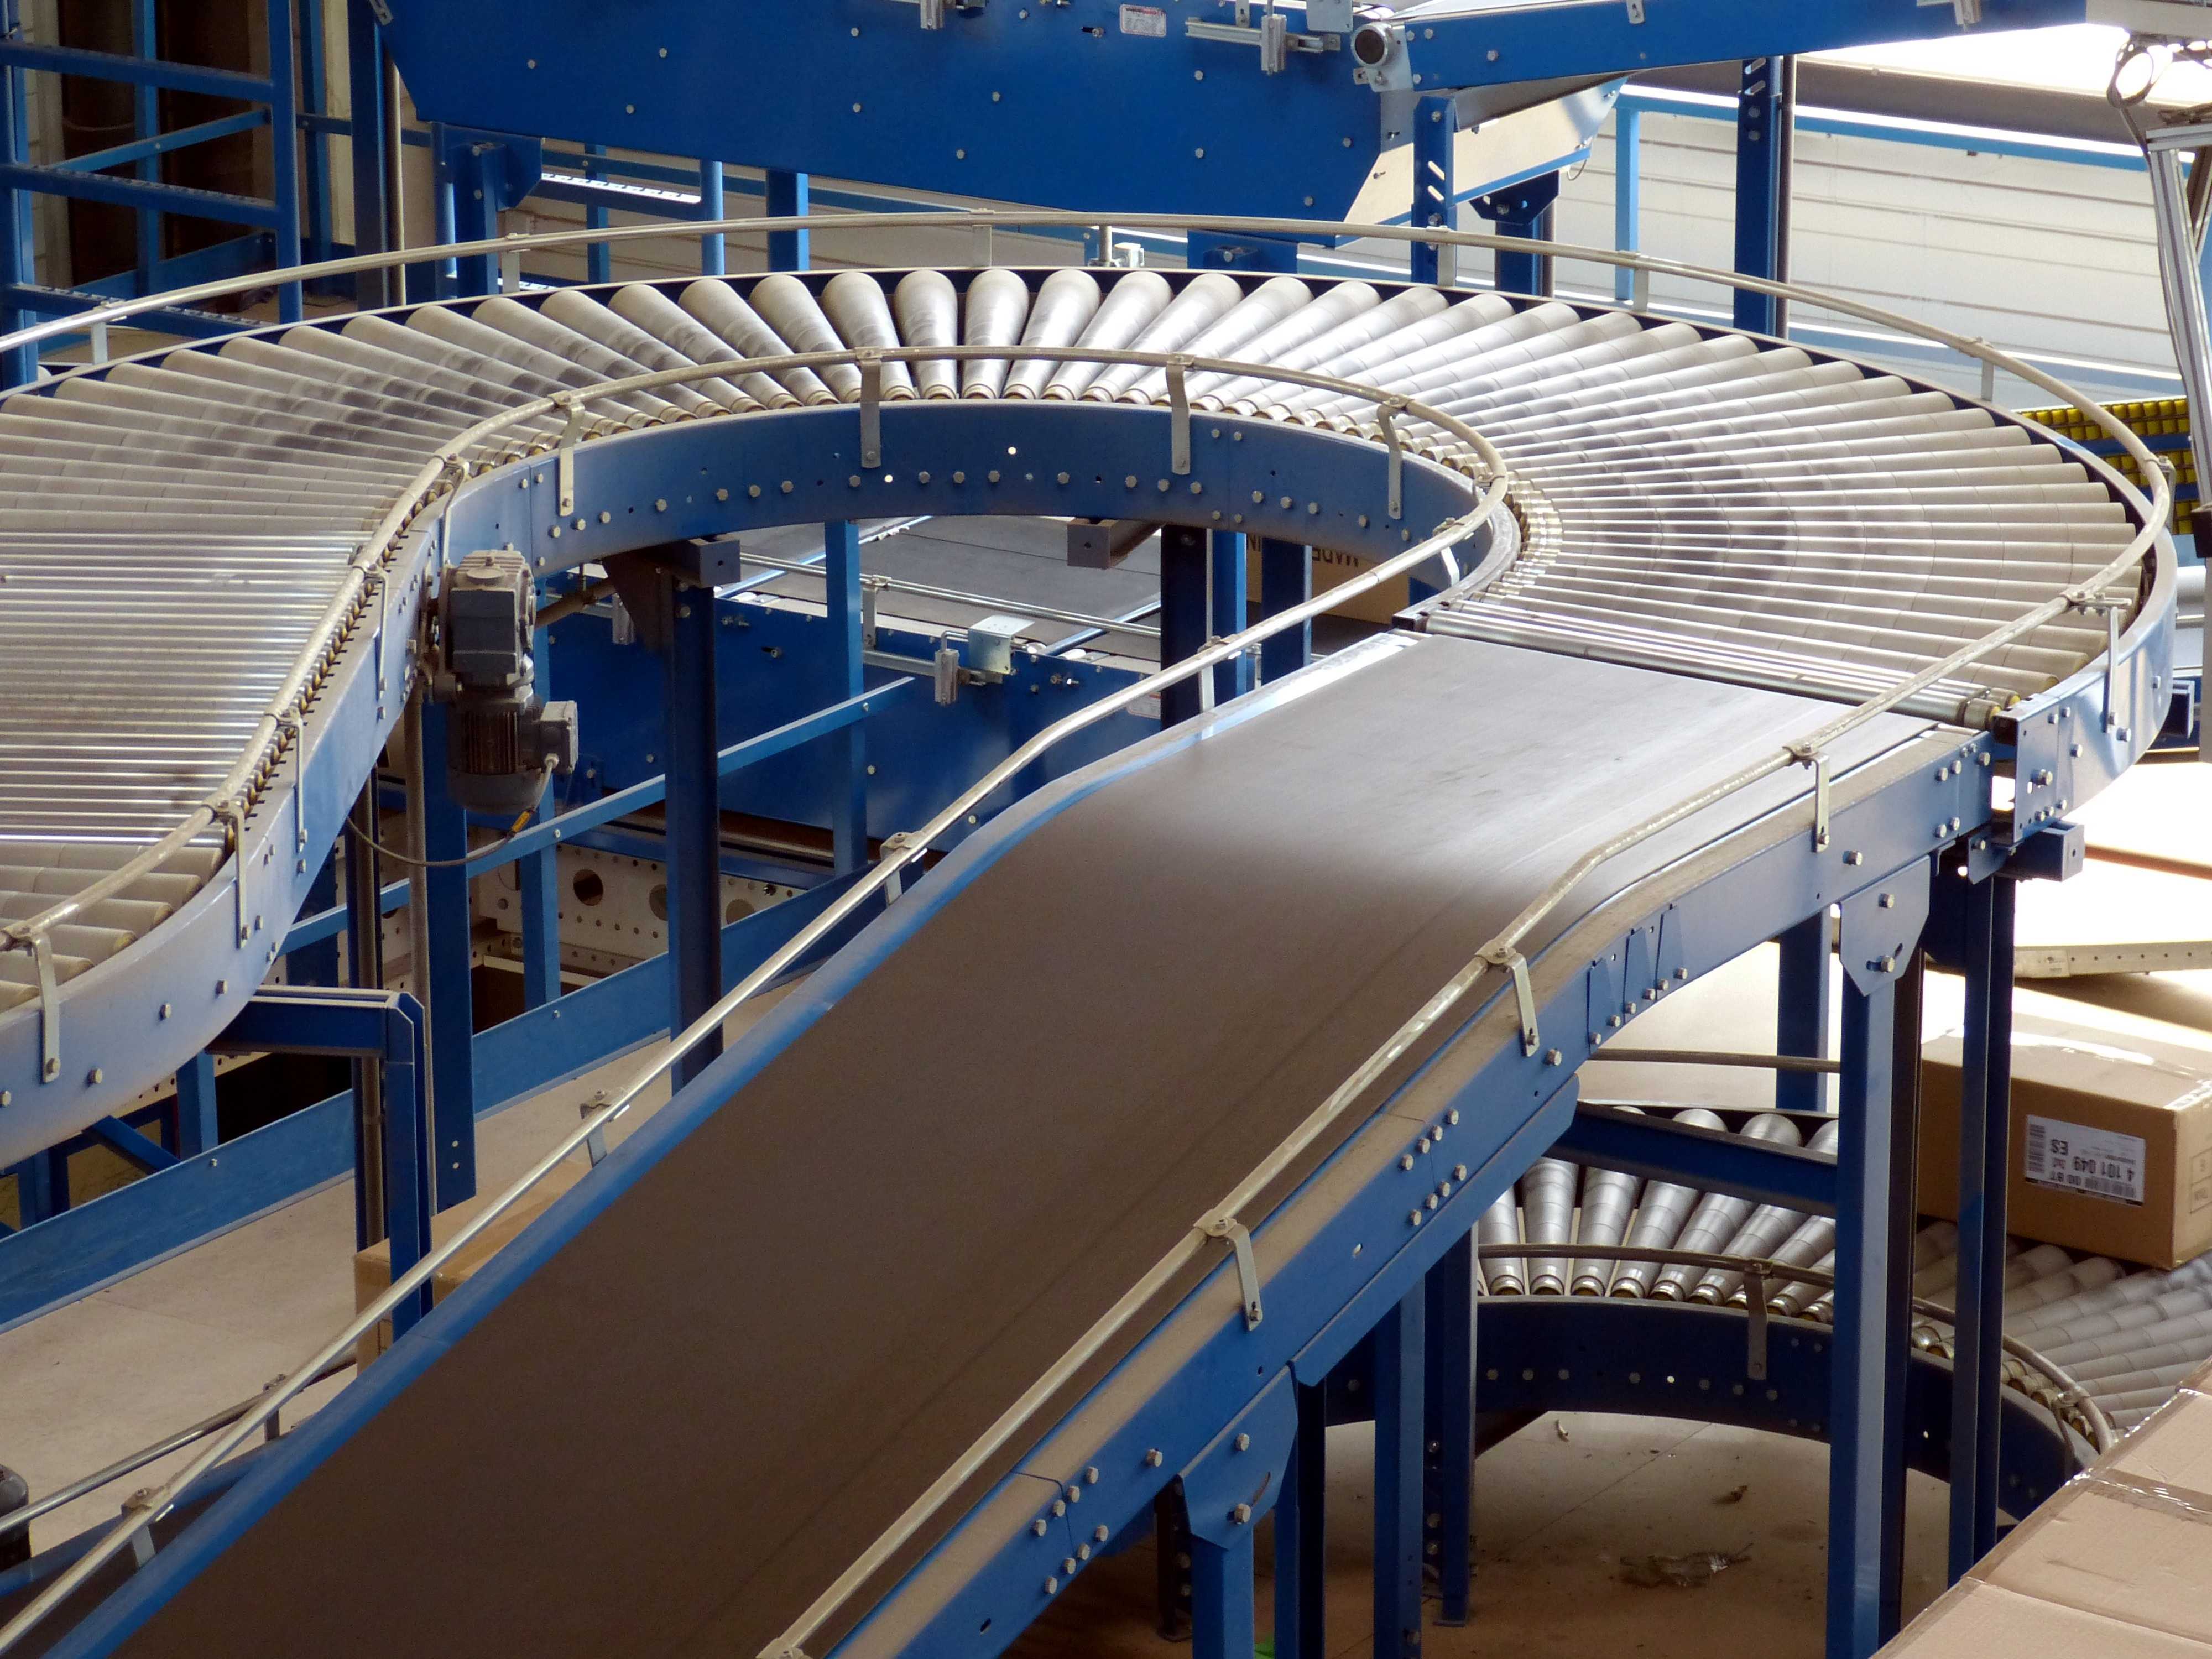 Conveyor belts at an automated logistics warehouse